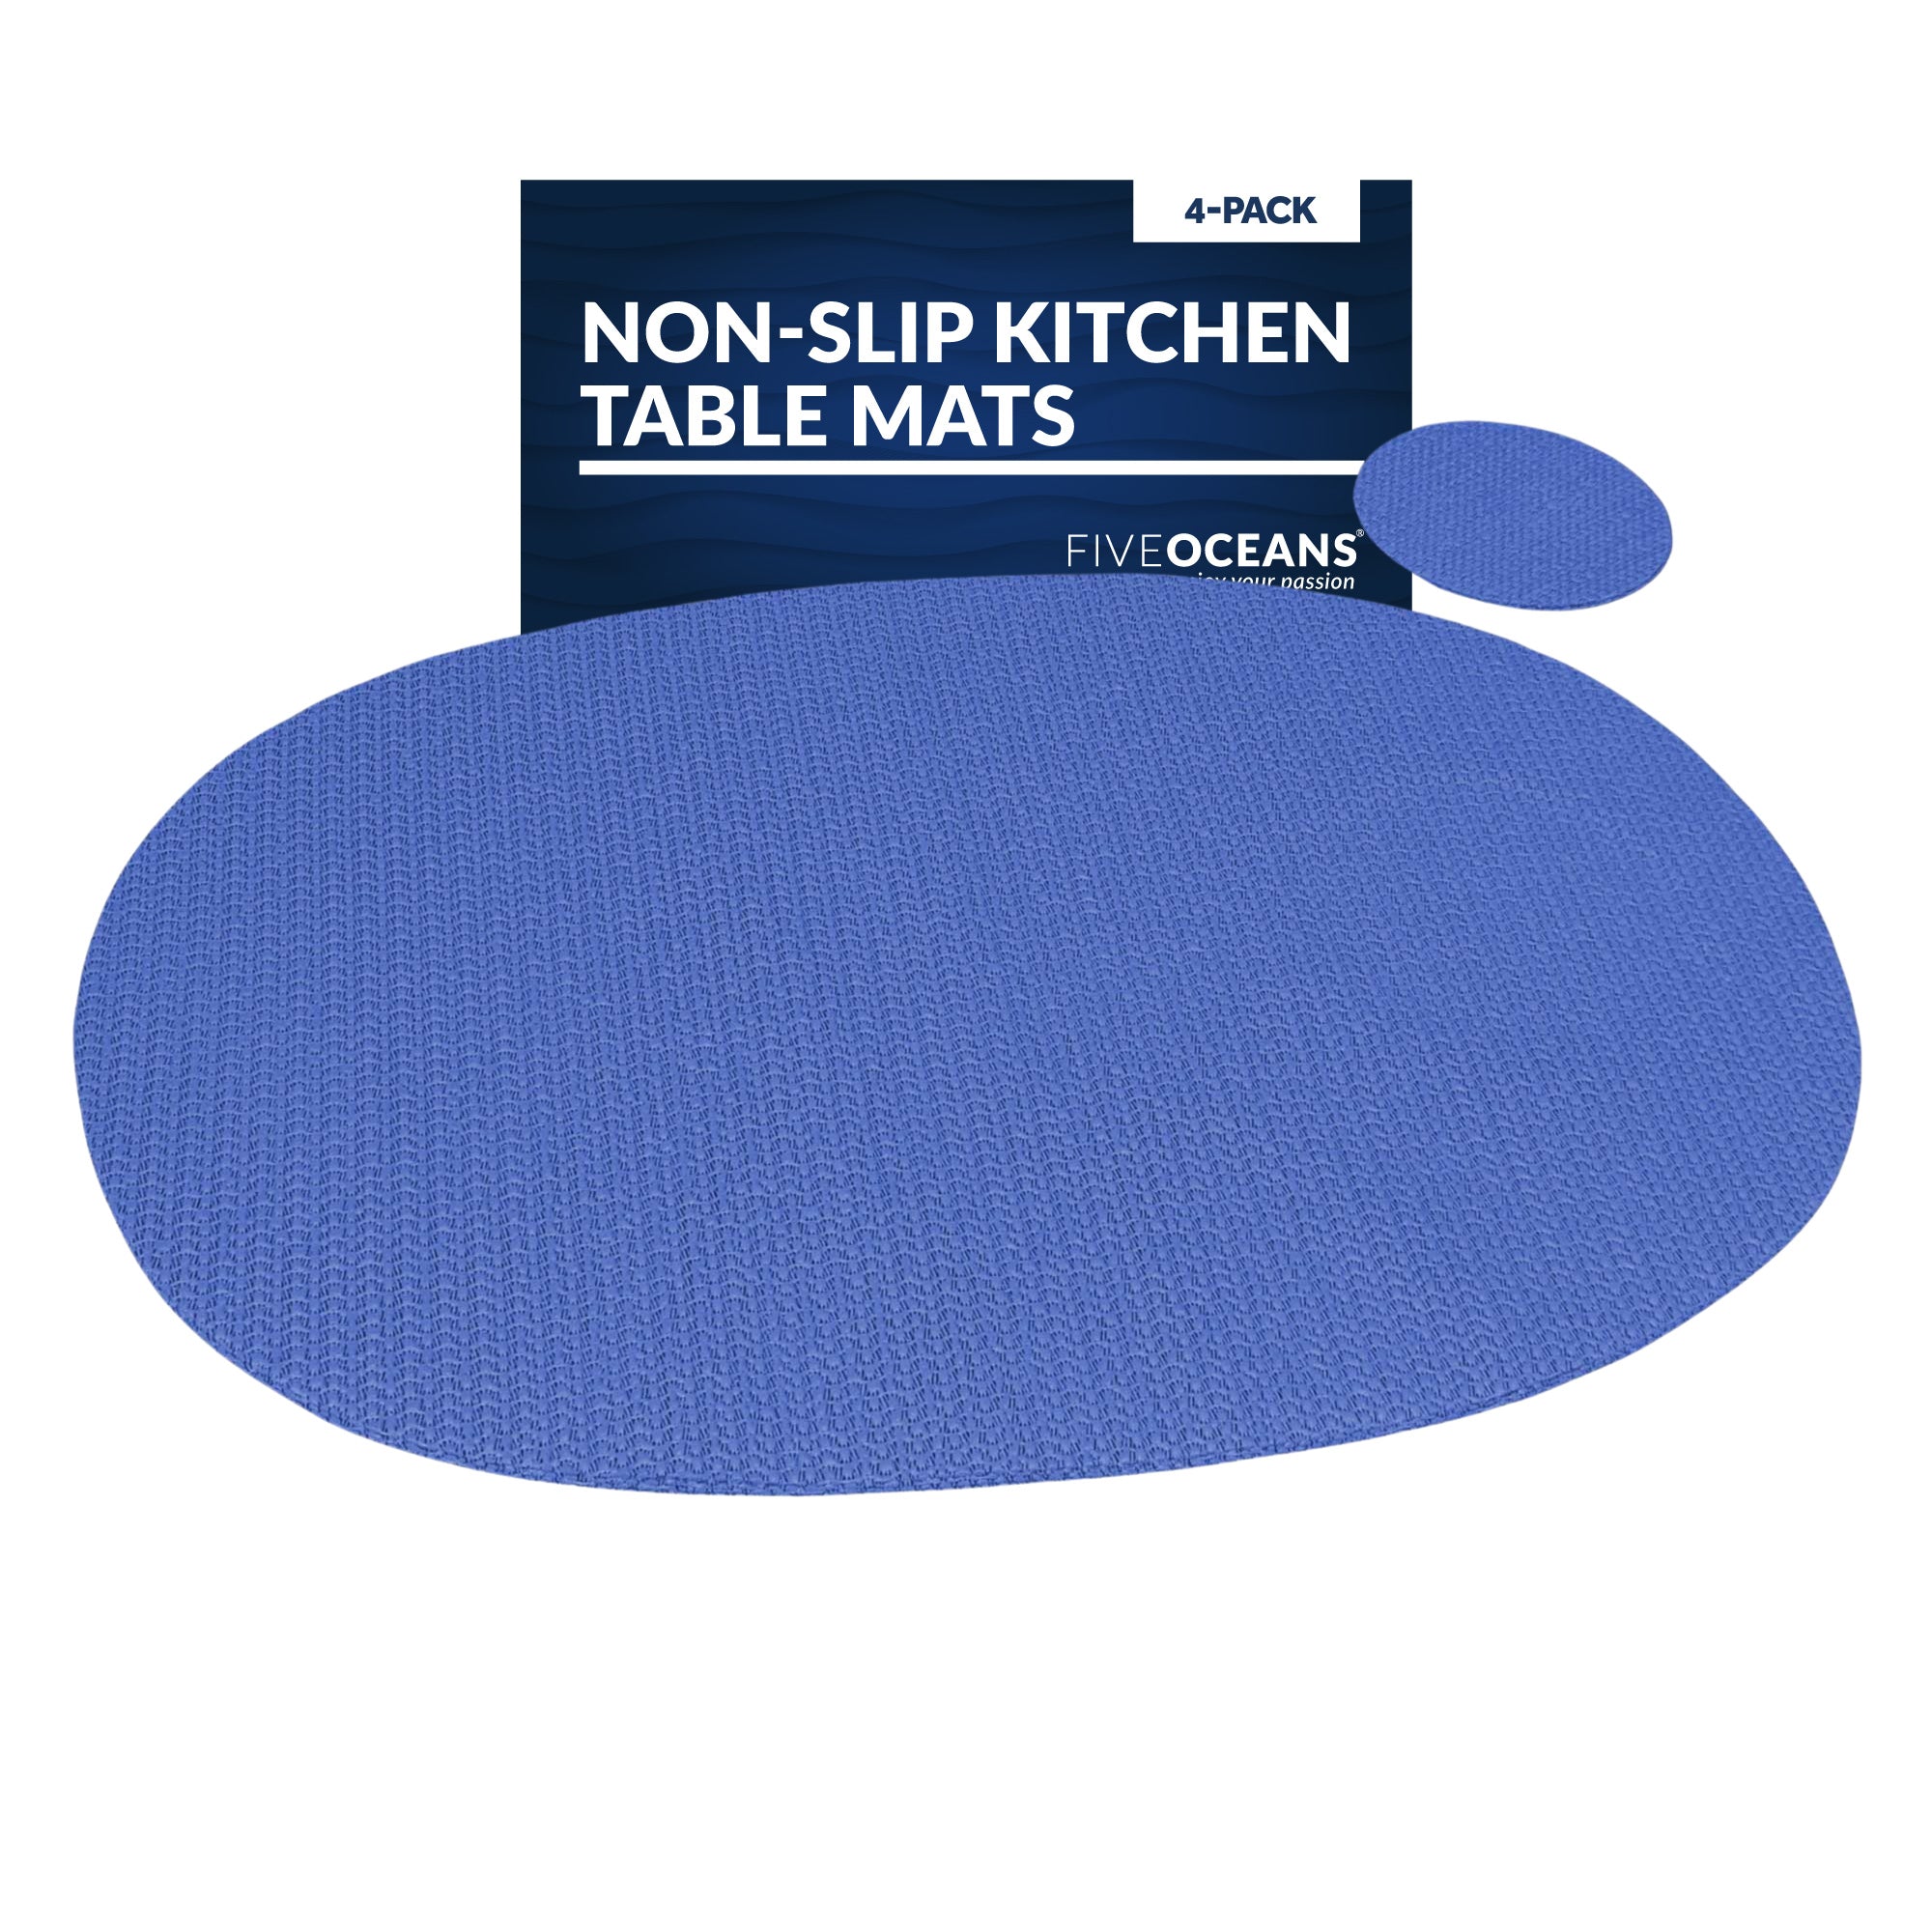 Non-Slip Kitchen Table Mats, Blue 4 Pack - FO94